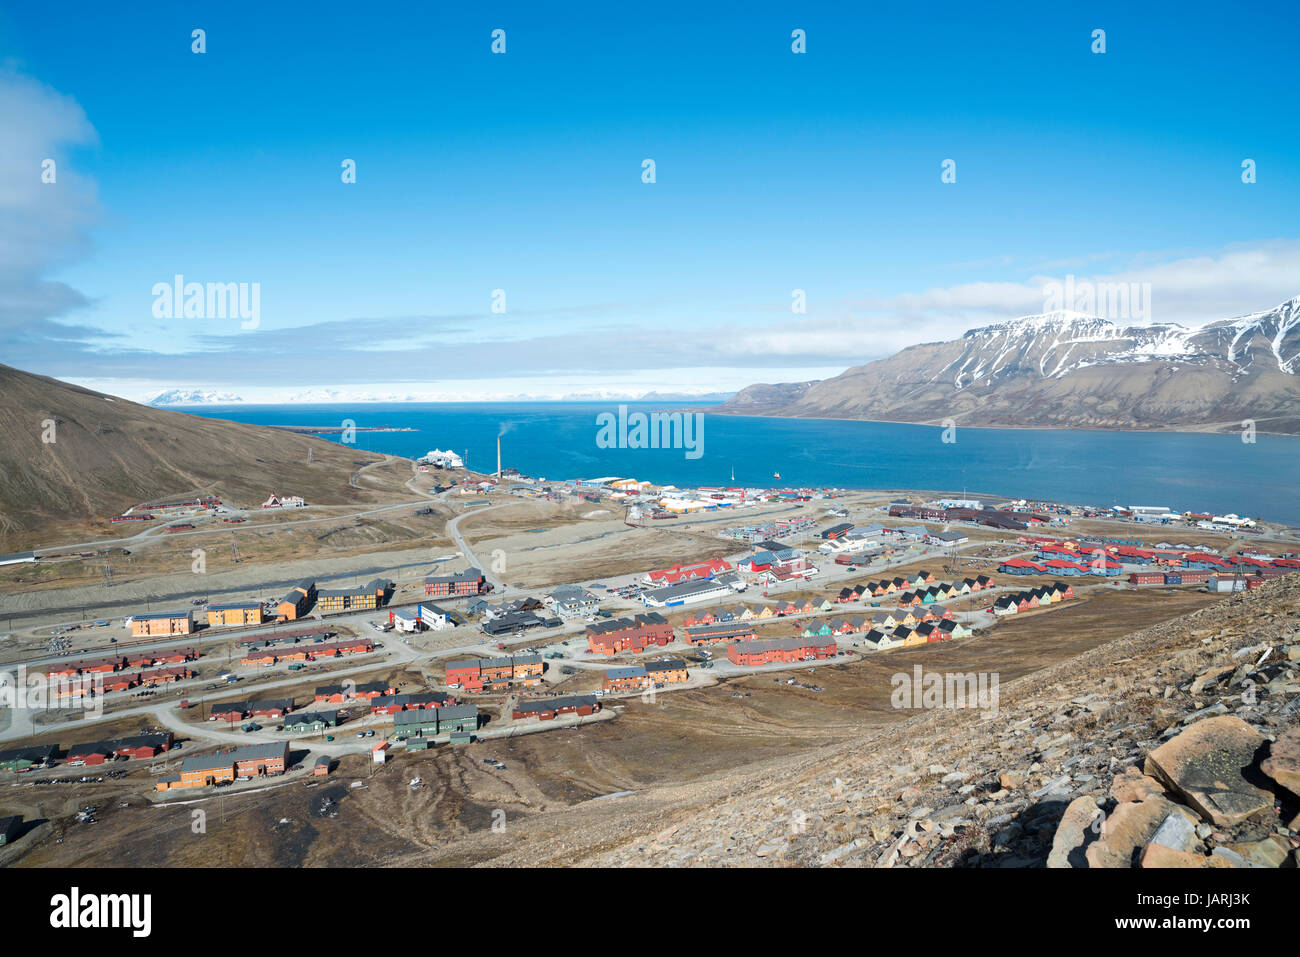 Panoramic view of Longyearbyen. Blick auf Longyearbyen. Stock Photo